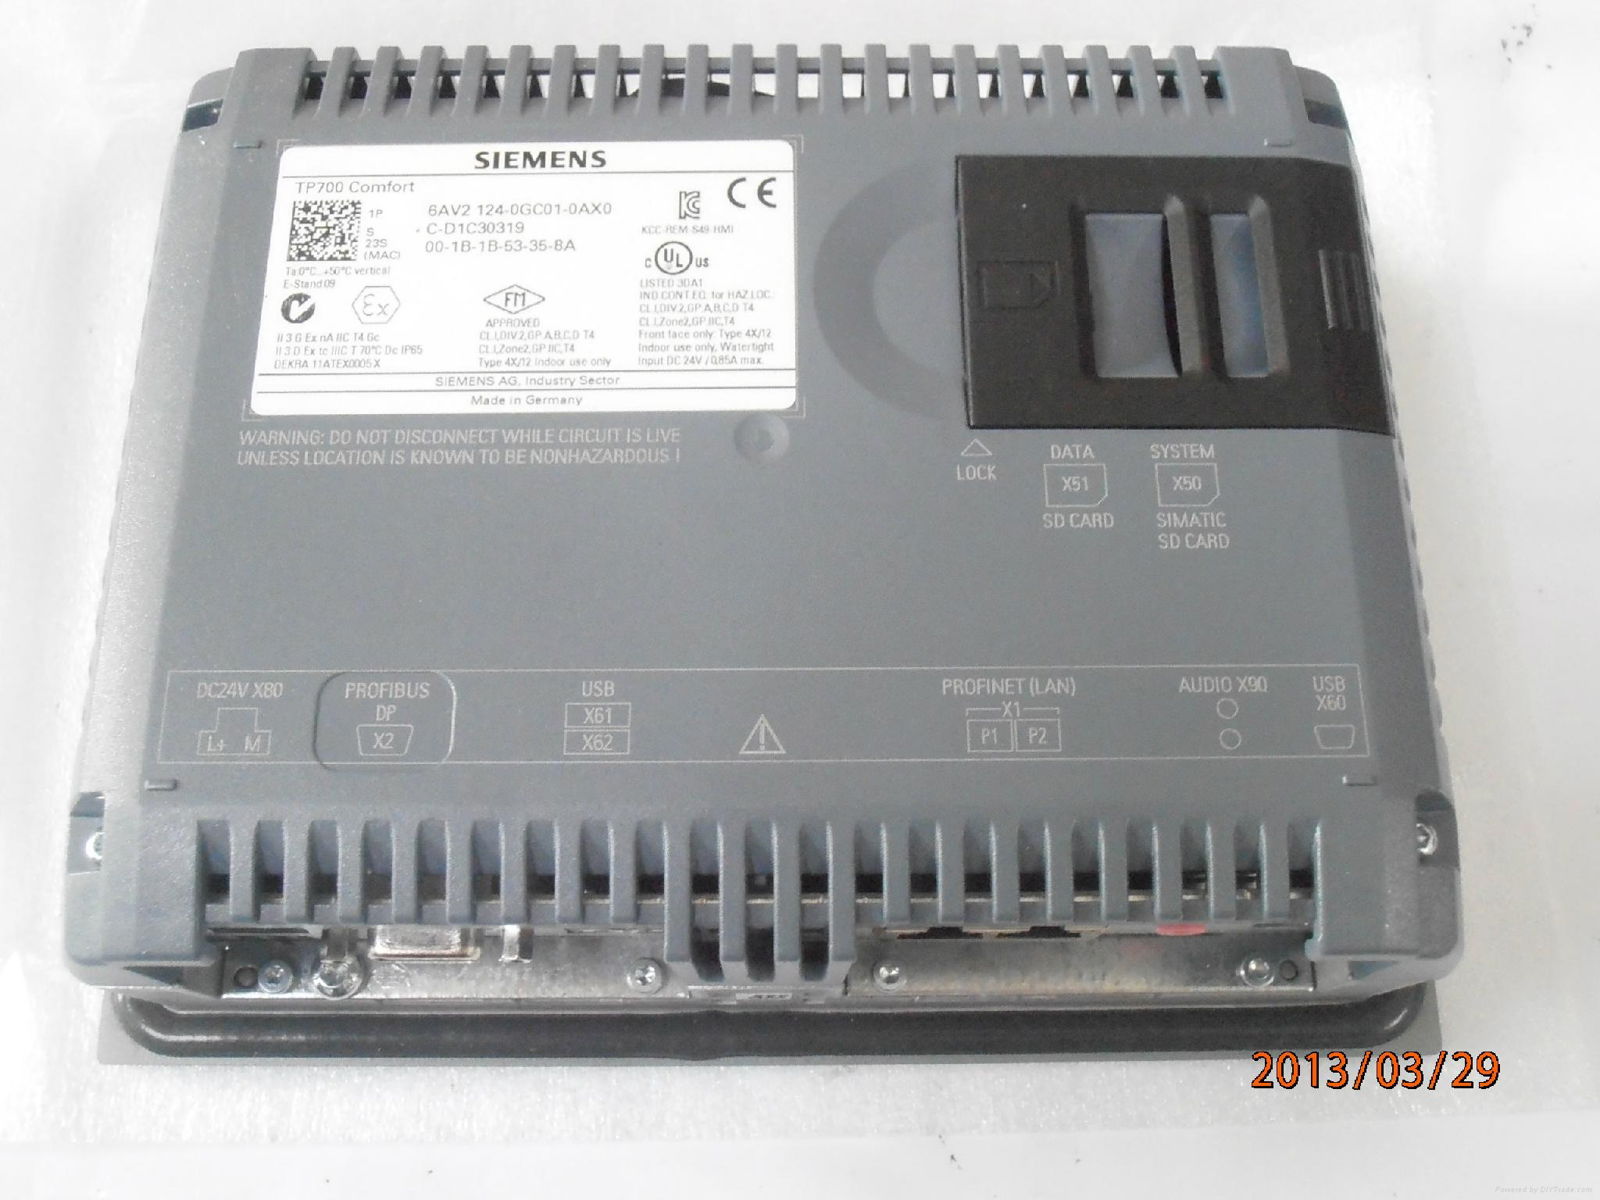 SIEMENS TP700 COMFORT Touch panel HMI 6AV2124-0GC01-0AX0